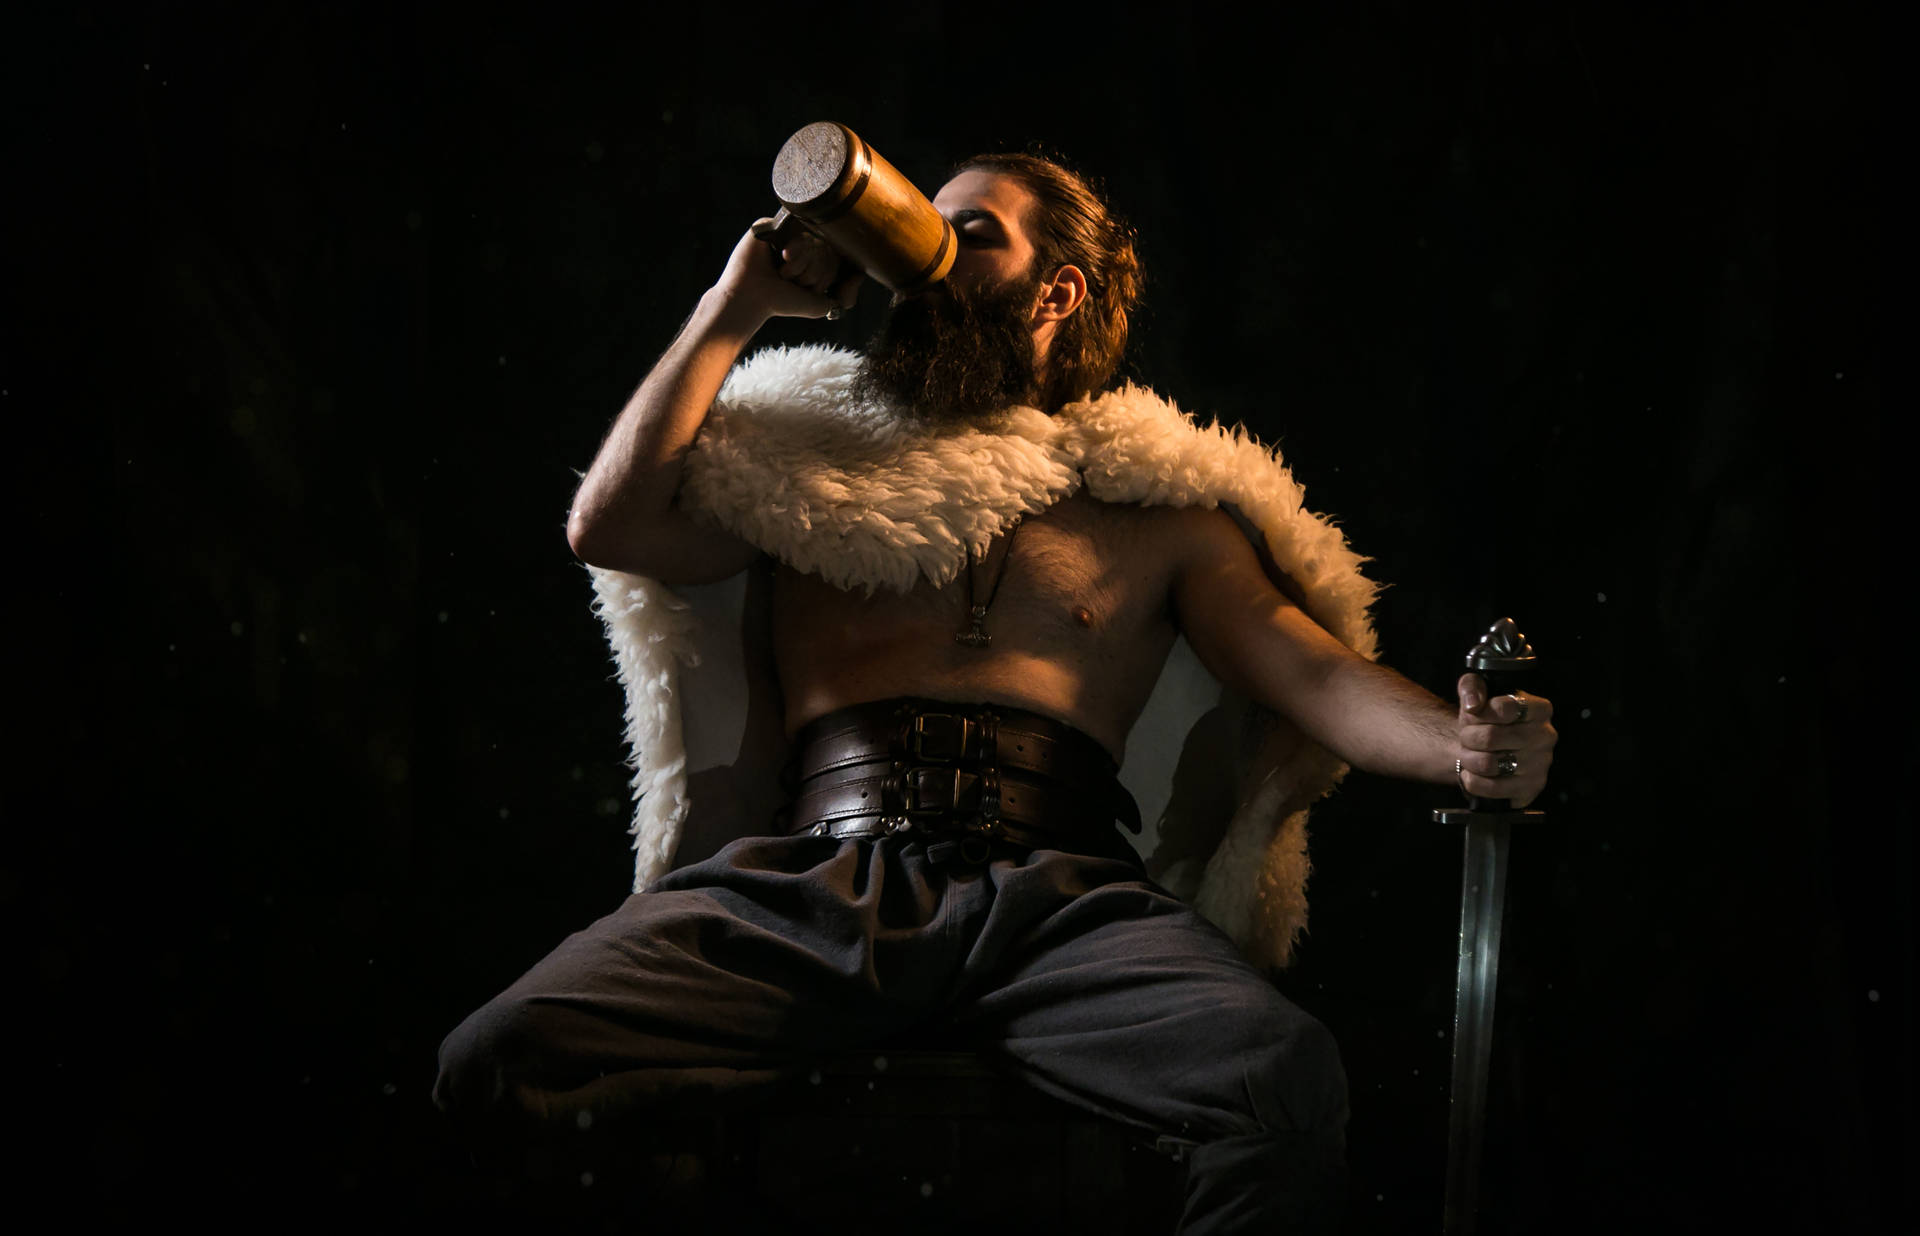 Warrior Drinking From Wooden Mug